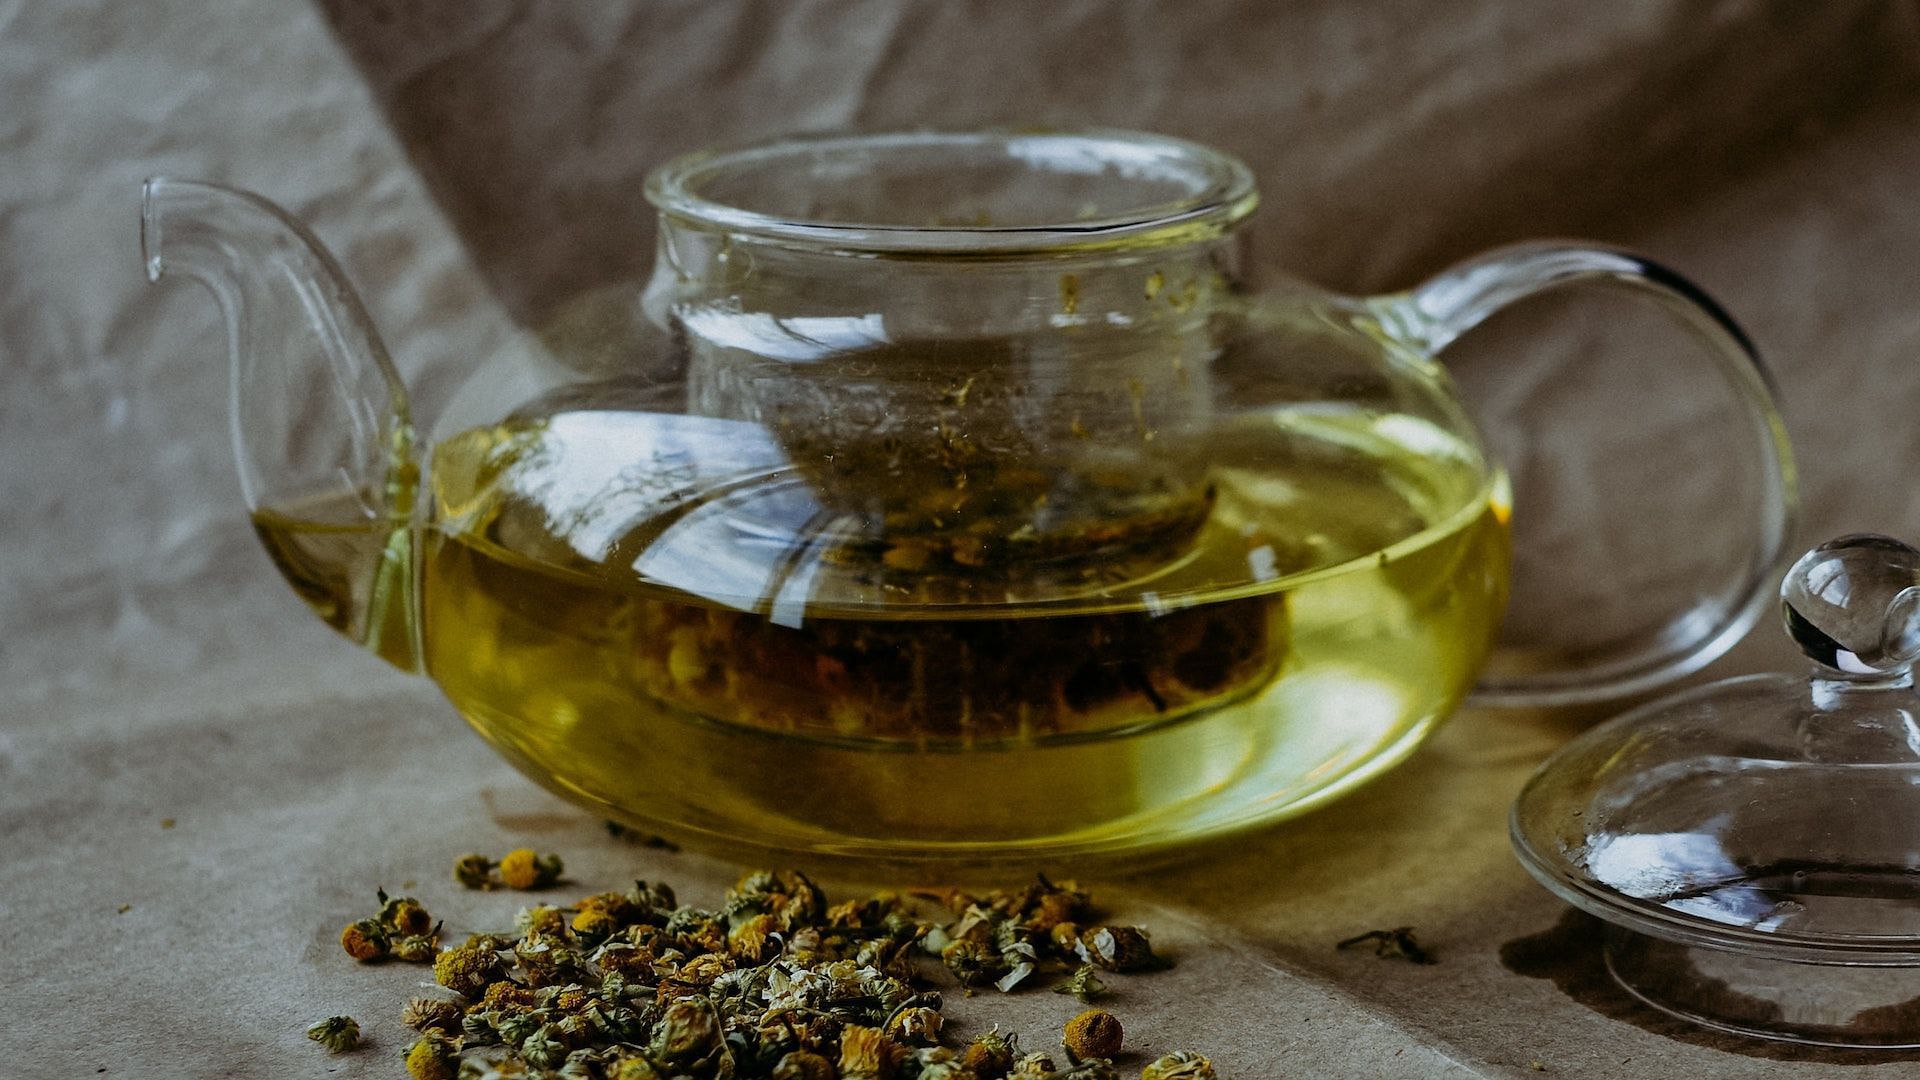 Green tea is rich in antioxidants. Image via Unsplash/Irene Ivantsova